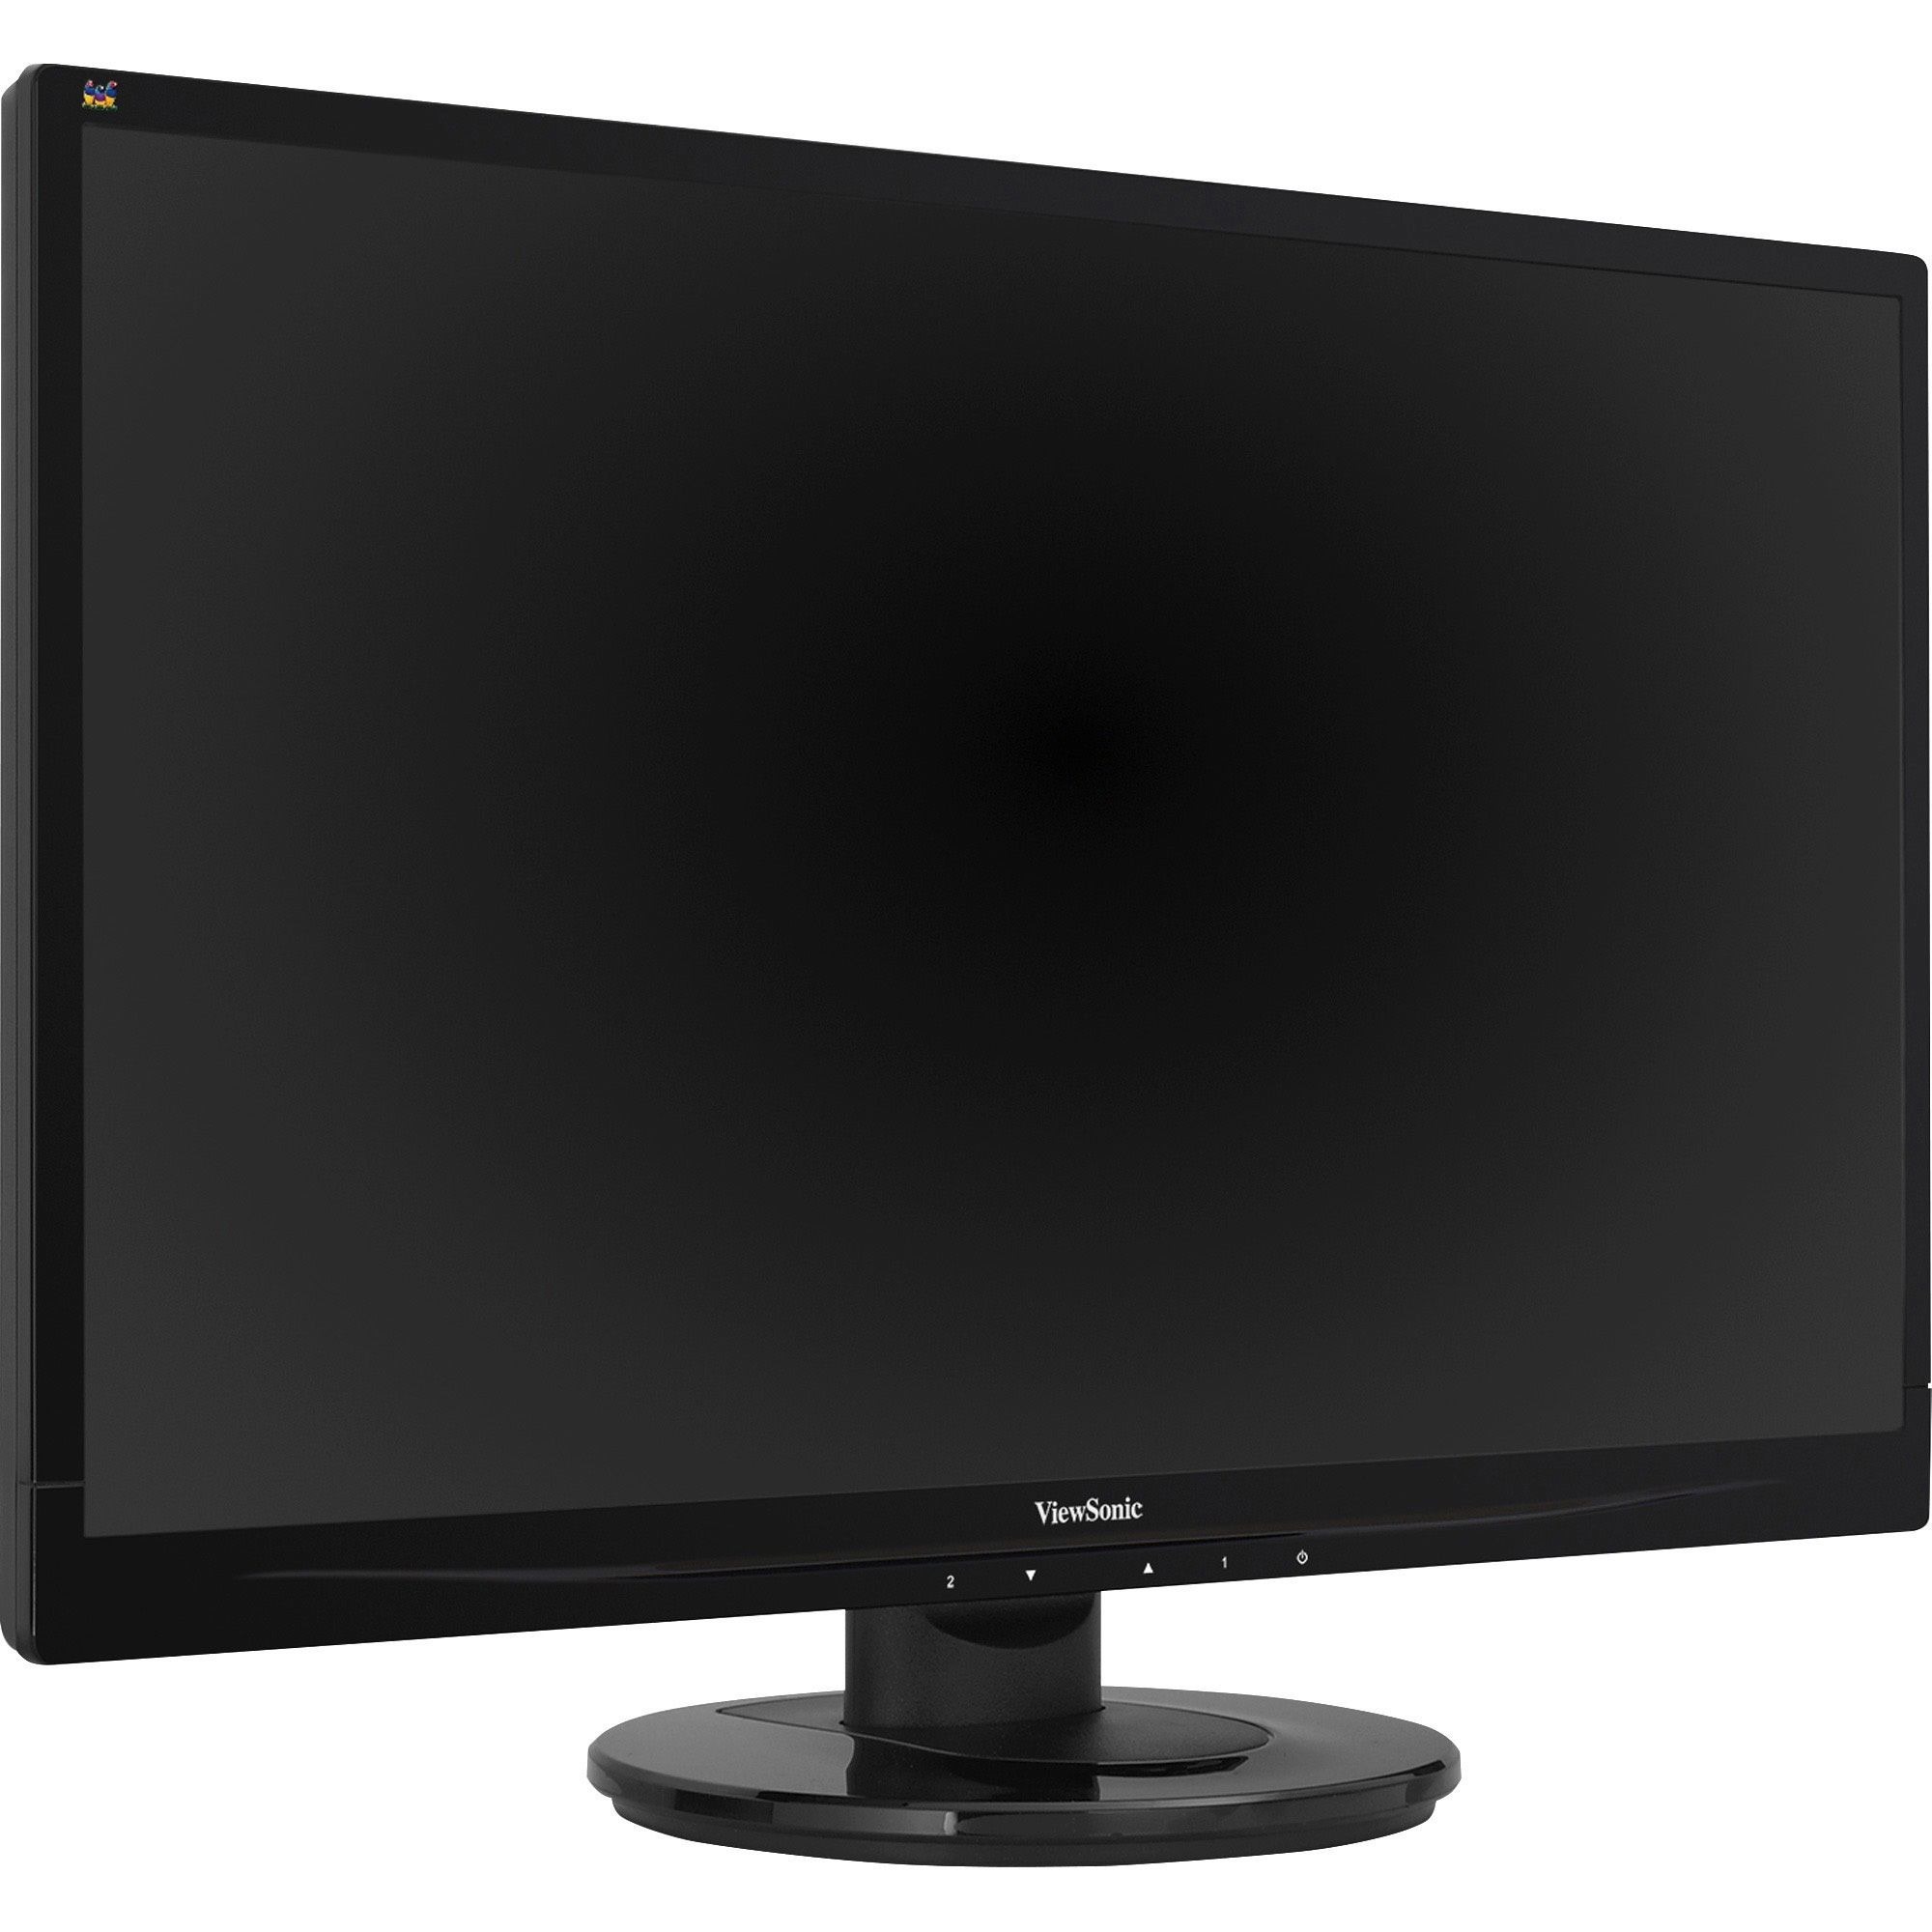 Viewsonic VA2446MH-LED 24" Full HD WLED LCD Monitor - 16:9 ...